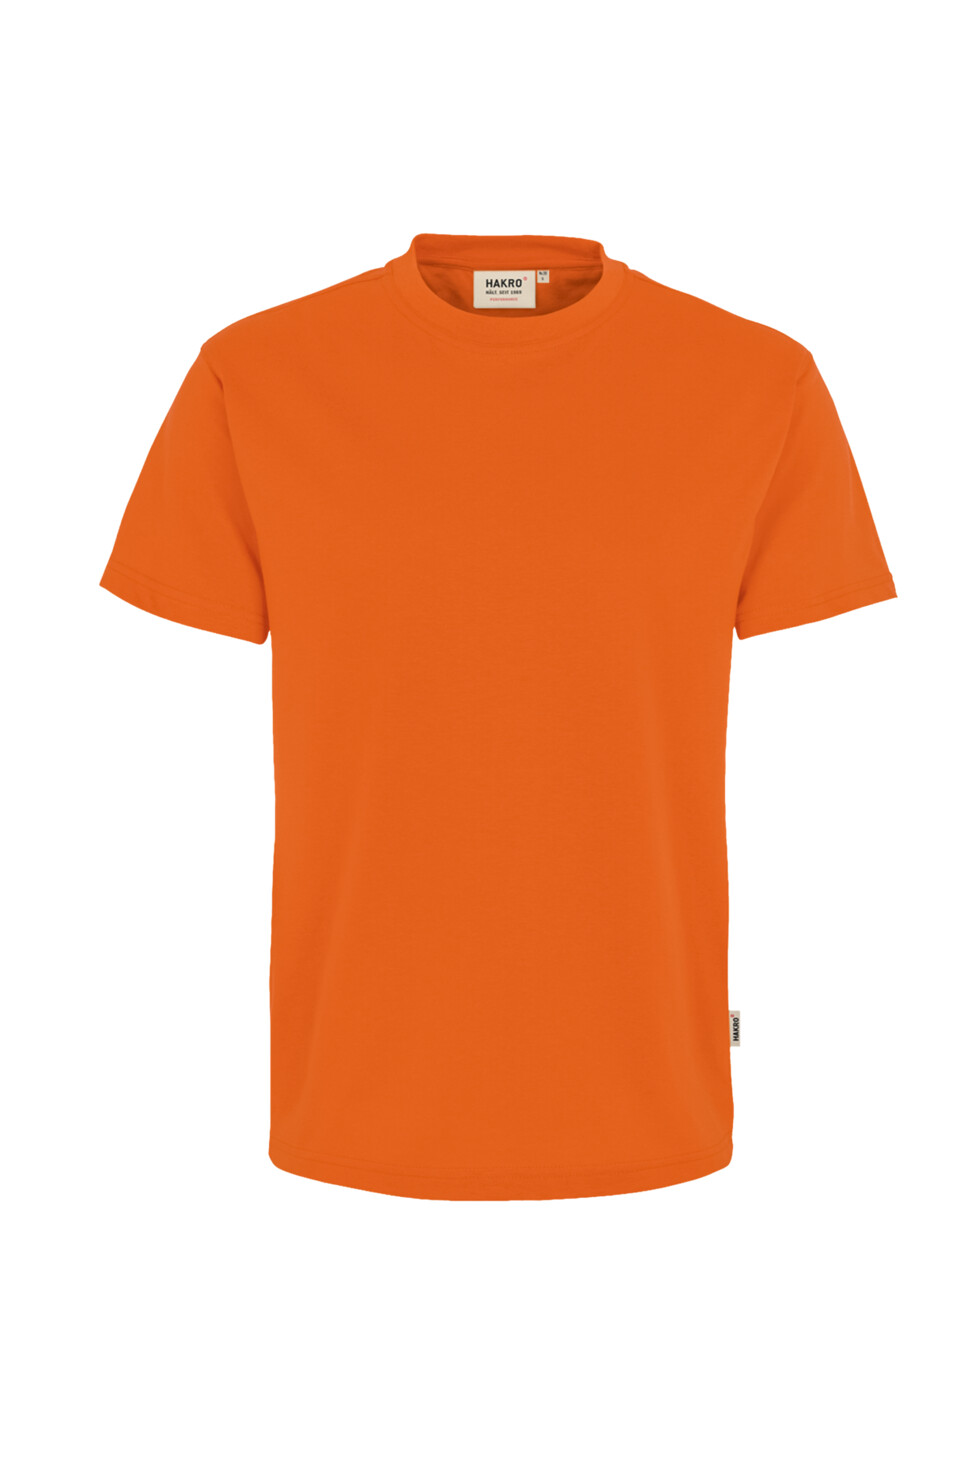 Hakro Herren T-Shirt Performance, Orange